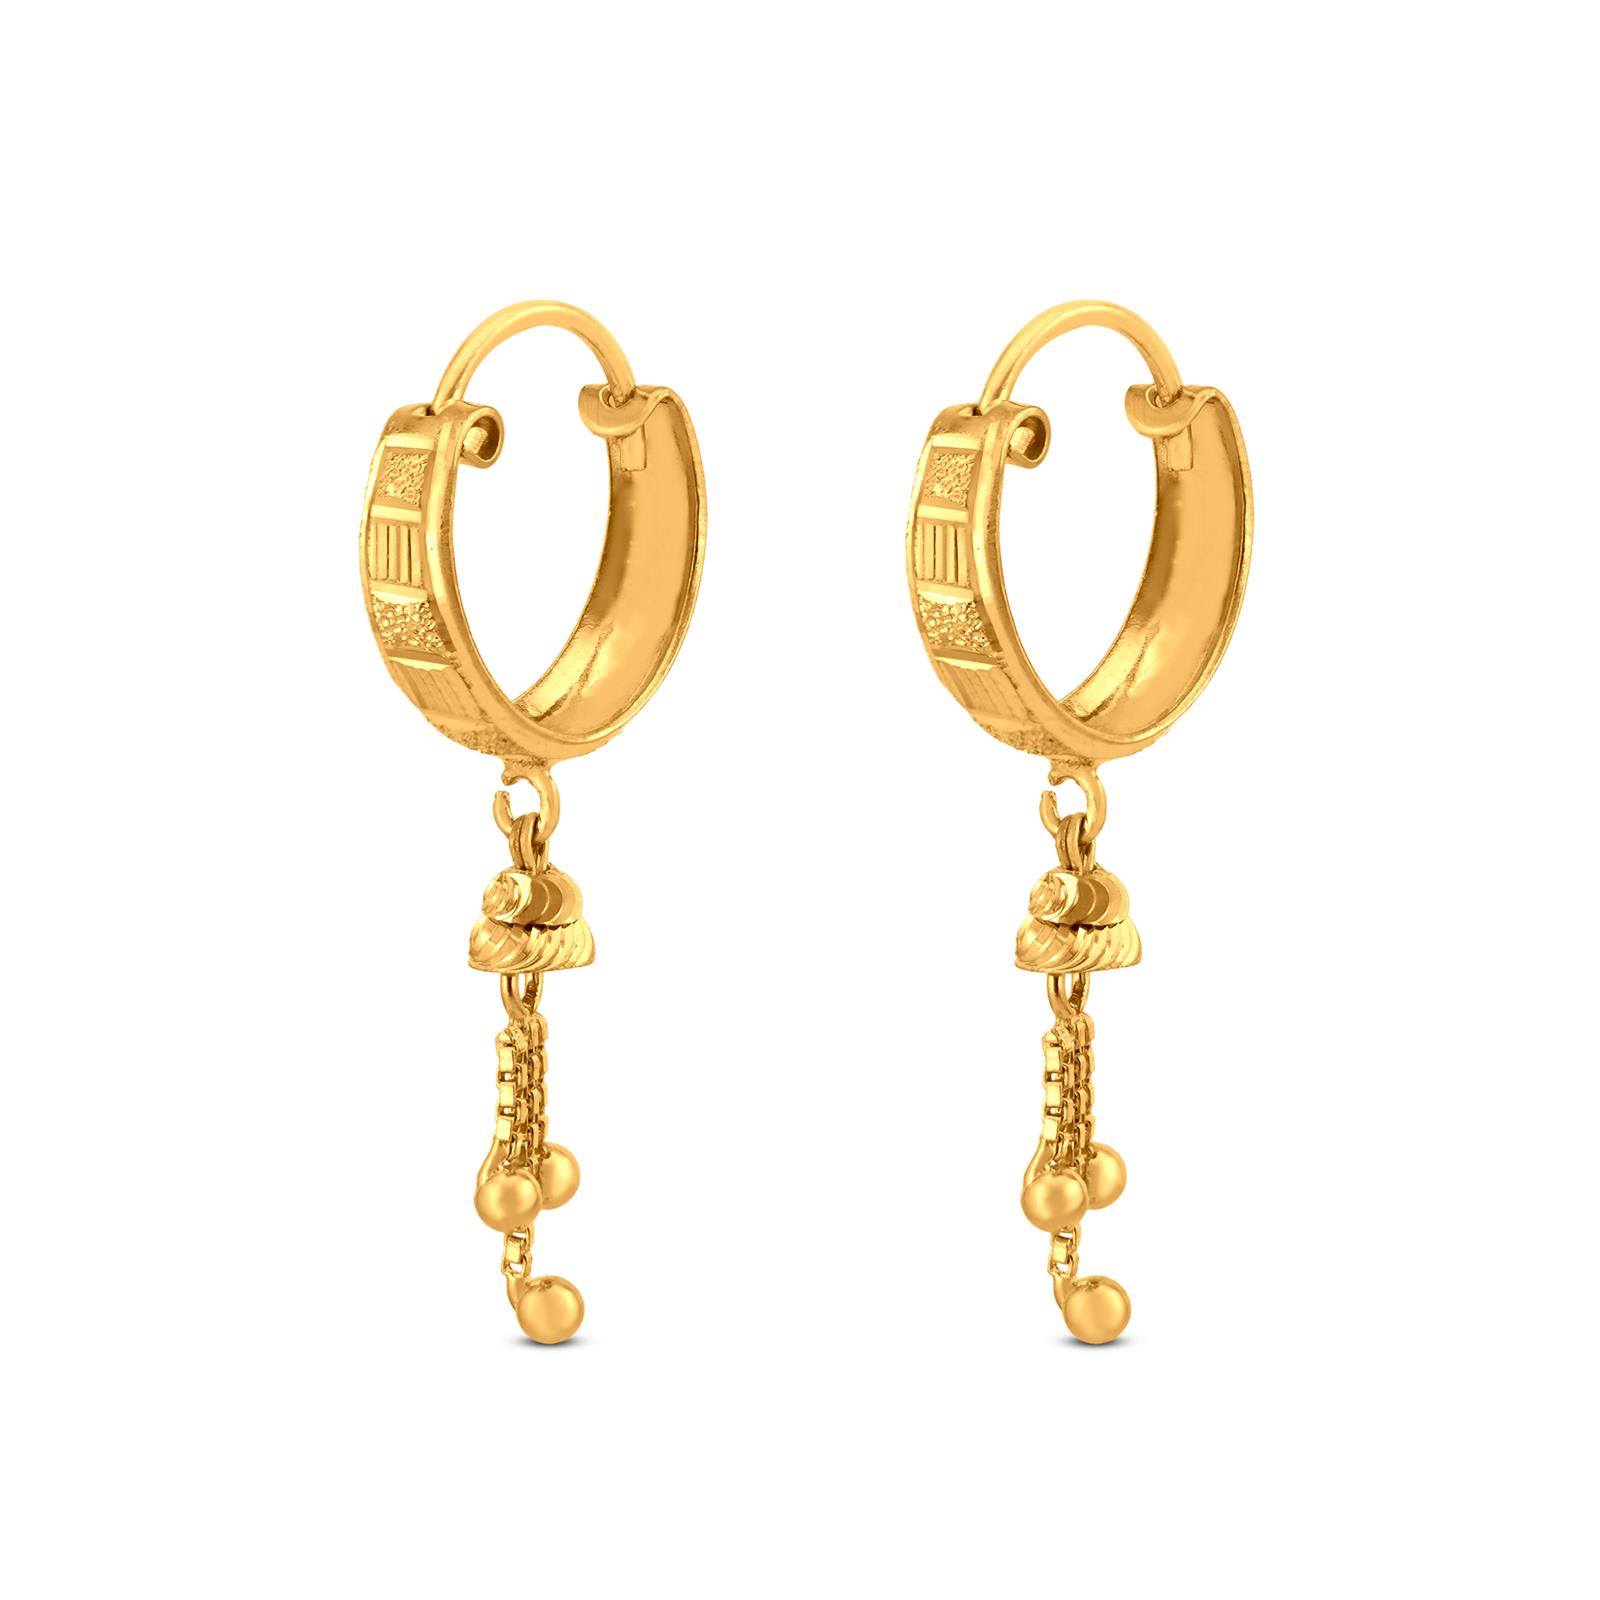 235-GER14338 - 22K Gold Hoop Earrings (Ear Bali) For Women With Pearls &  Japanese Culture Pearls | Gold hoop earrings, Gold earrings for women,  Cultured pearls